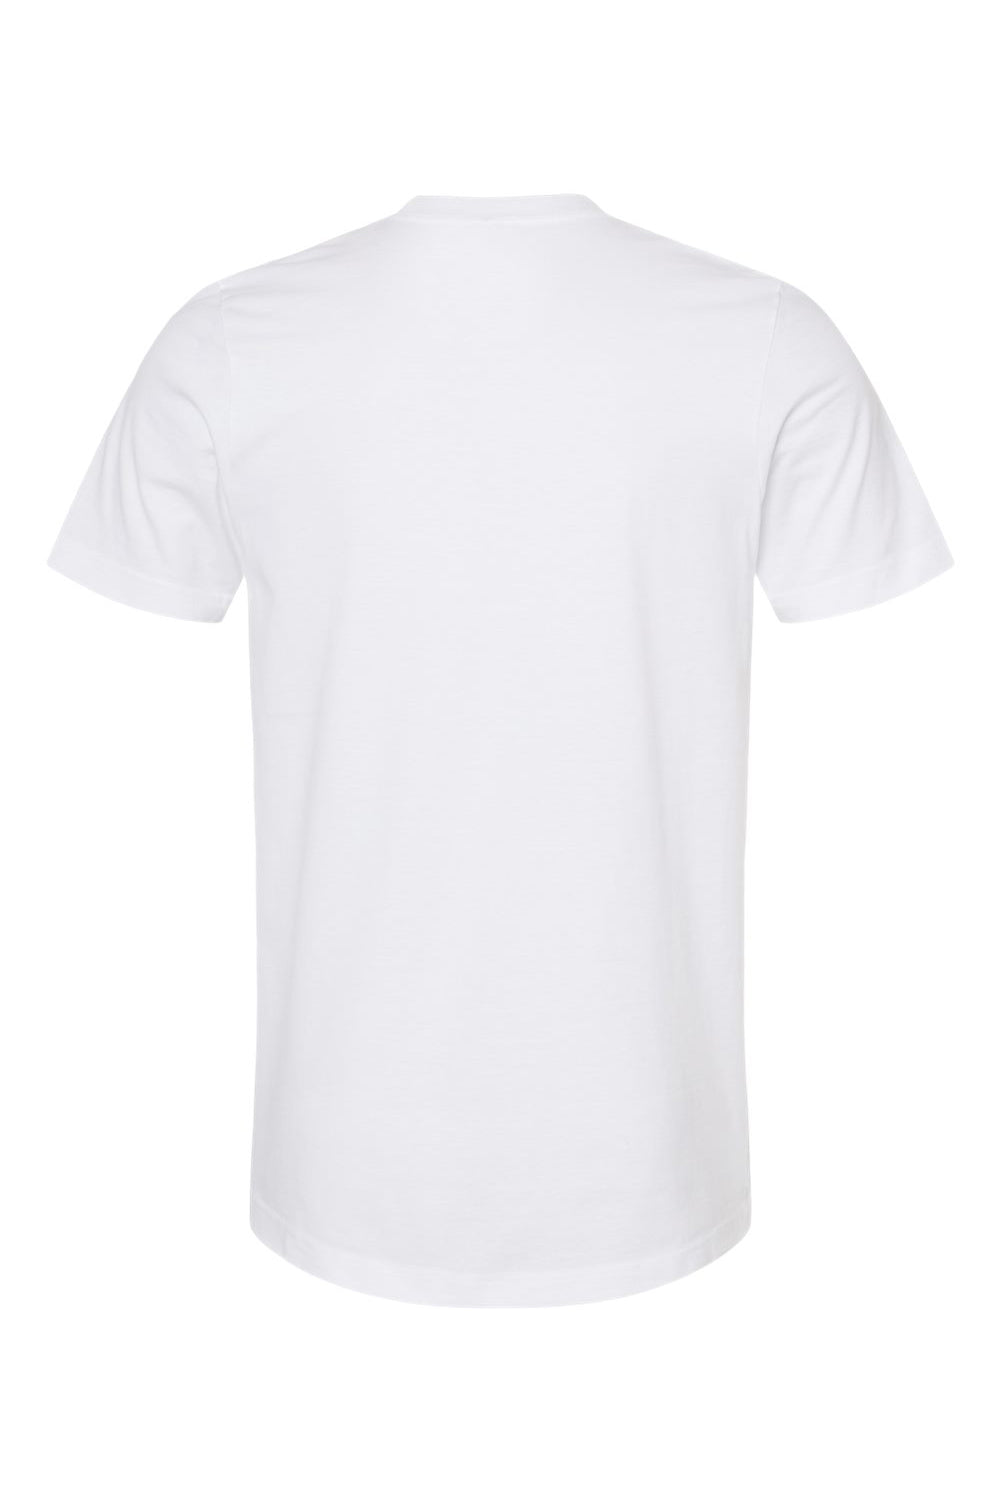 Tultex 502 Mens Premium Short Sleeve Crewneck T-Shirt White Flat Back